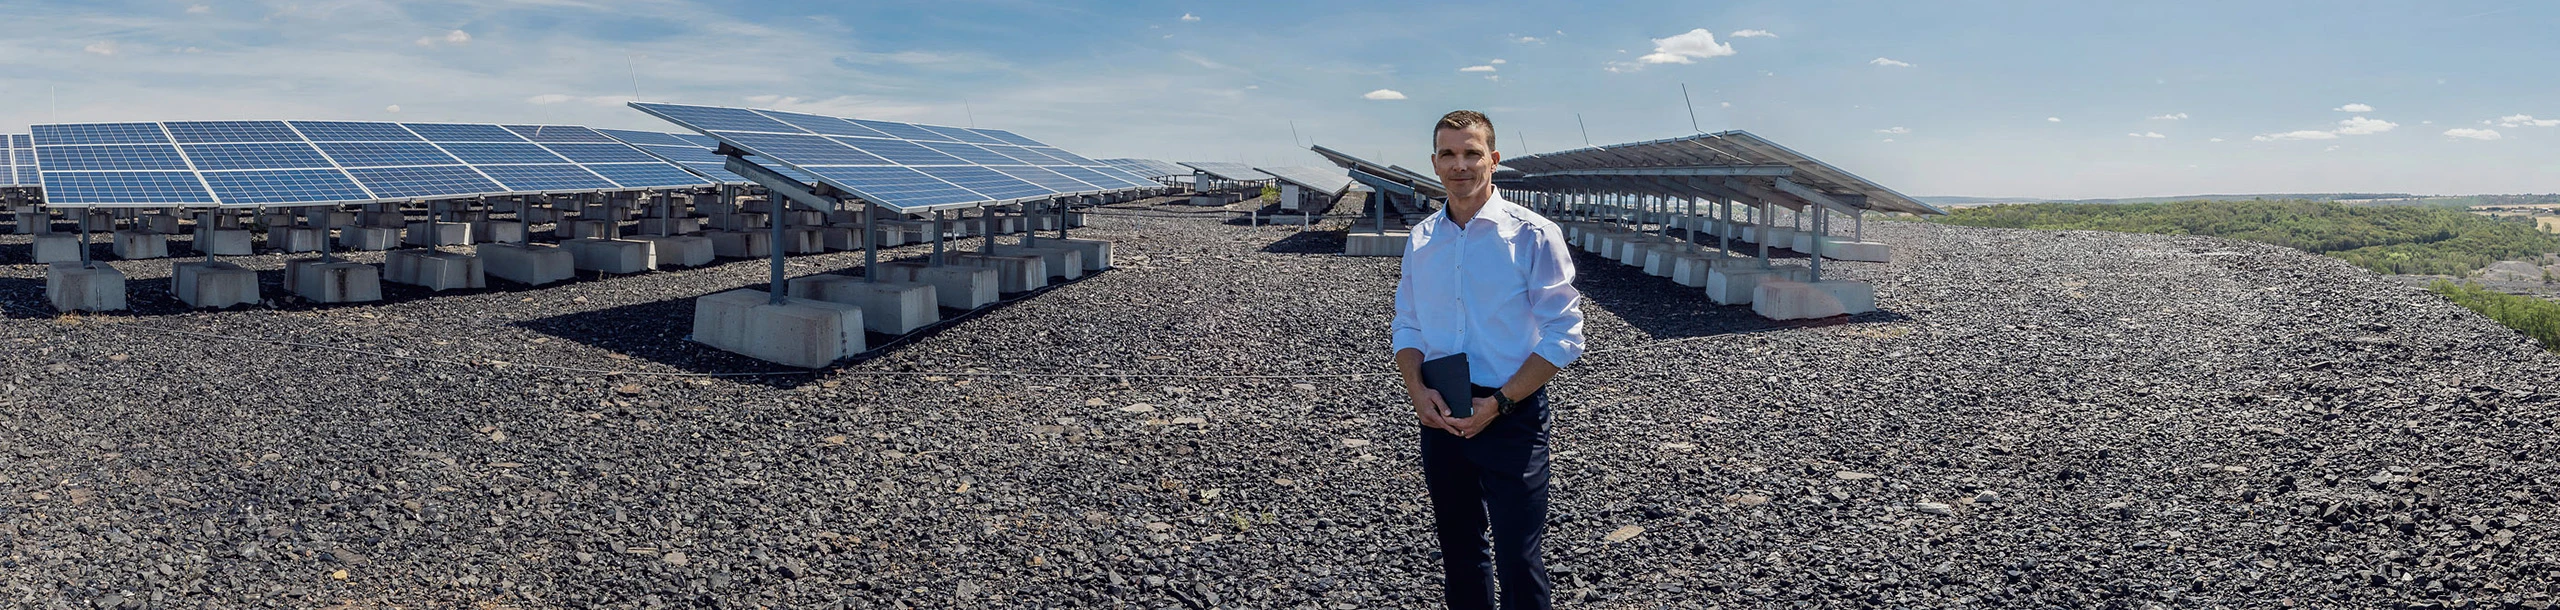 Marco Sparmann vor Solarmodulen des Solarparks Krughütte